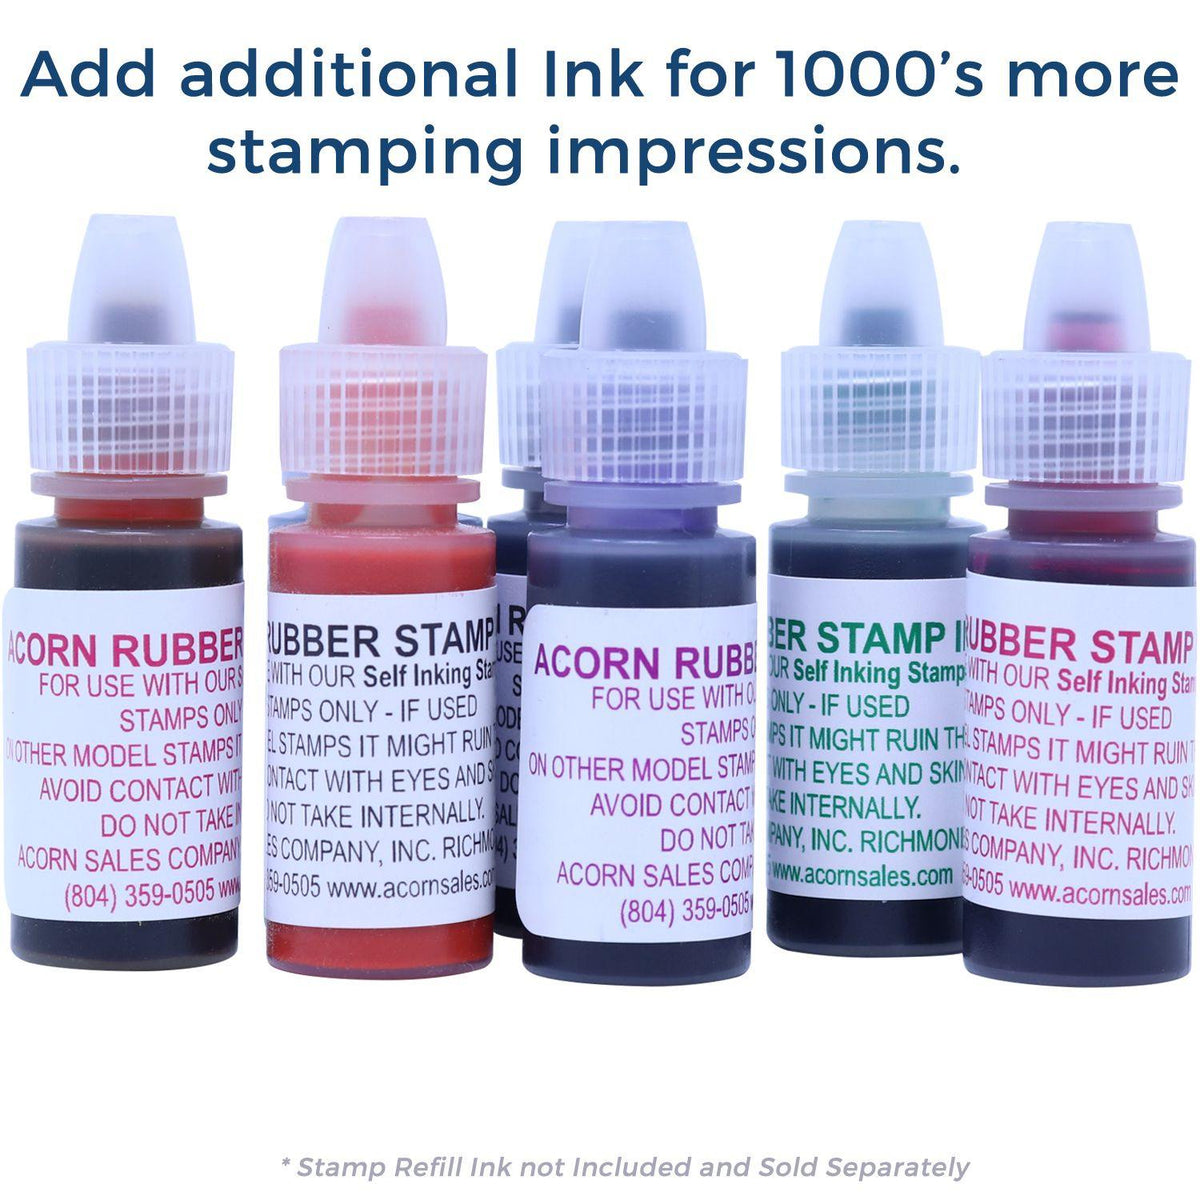 Slim Pre-Inked Brilliant Stamp - Engineer Seal Stamps - Brand_Slim, Impression Size_Small, Stamp Type_Pre-Inked Stamp, Type of Use_General, Type of Use_Teacher